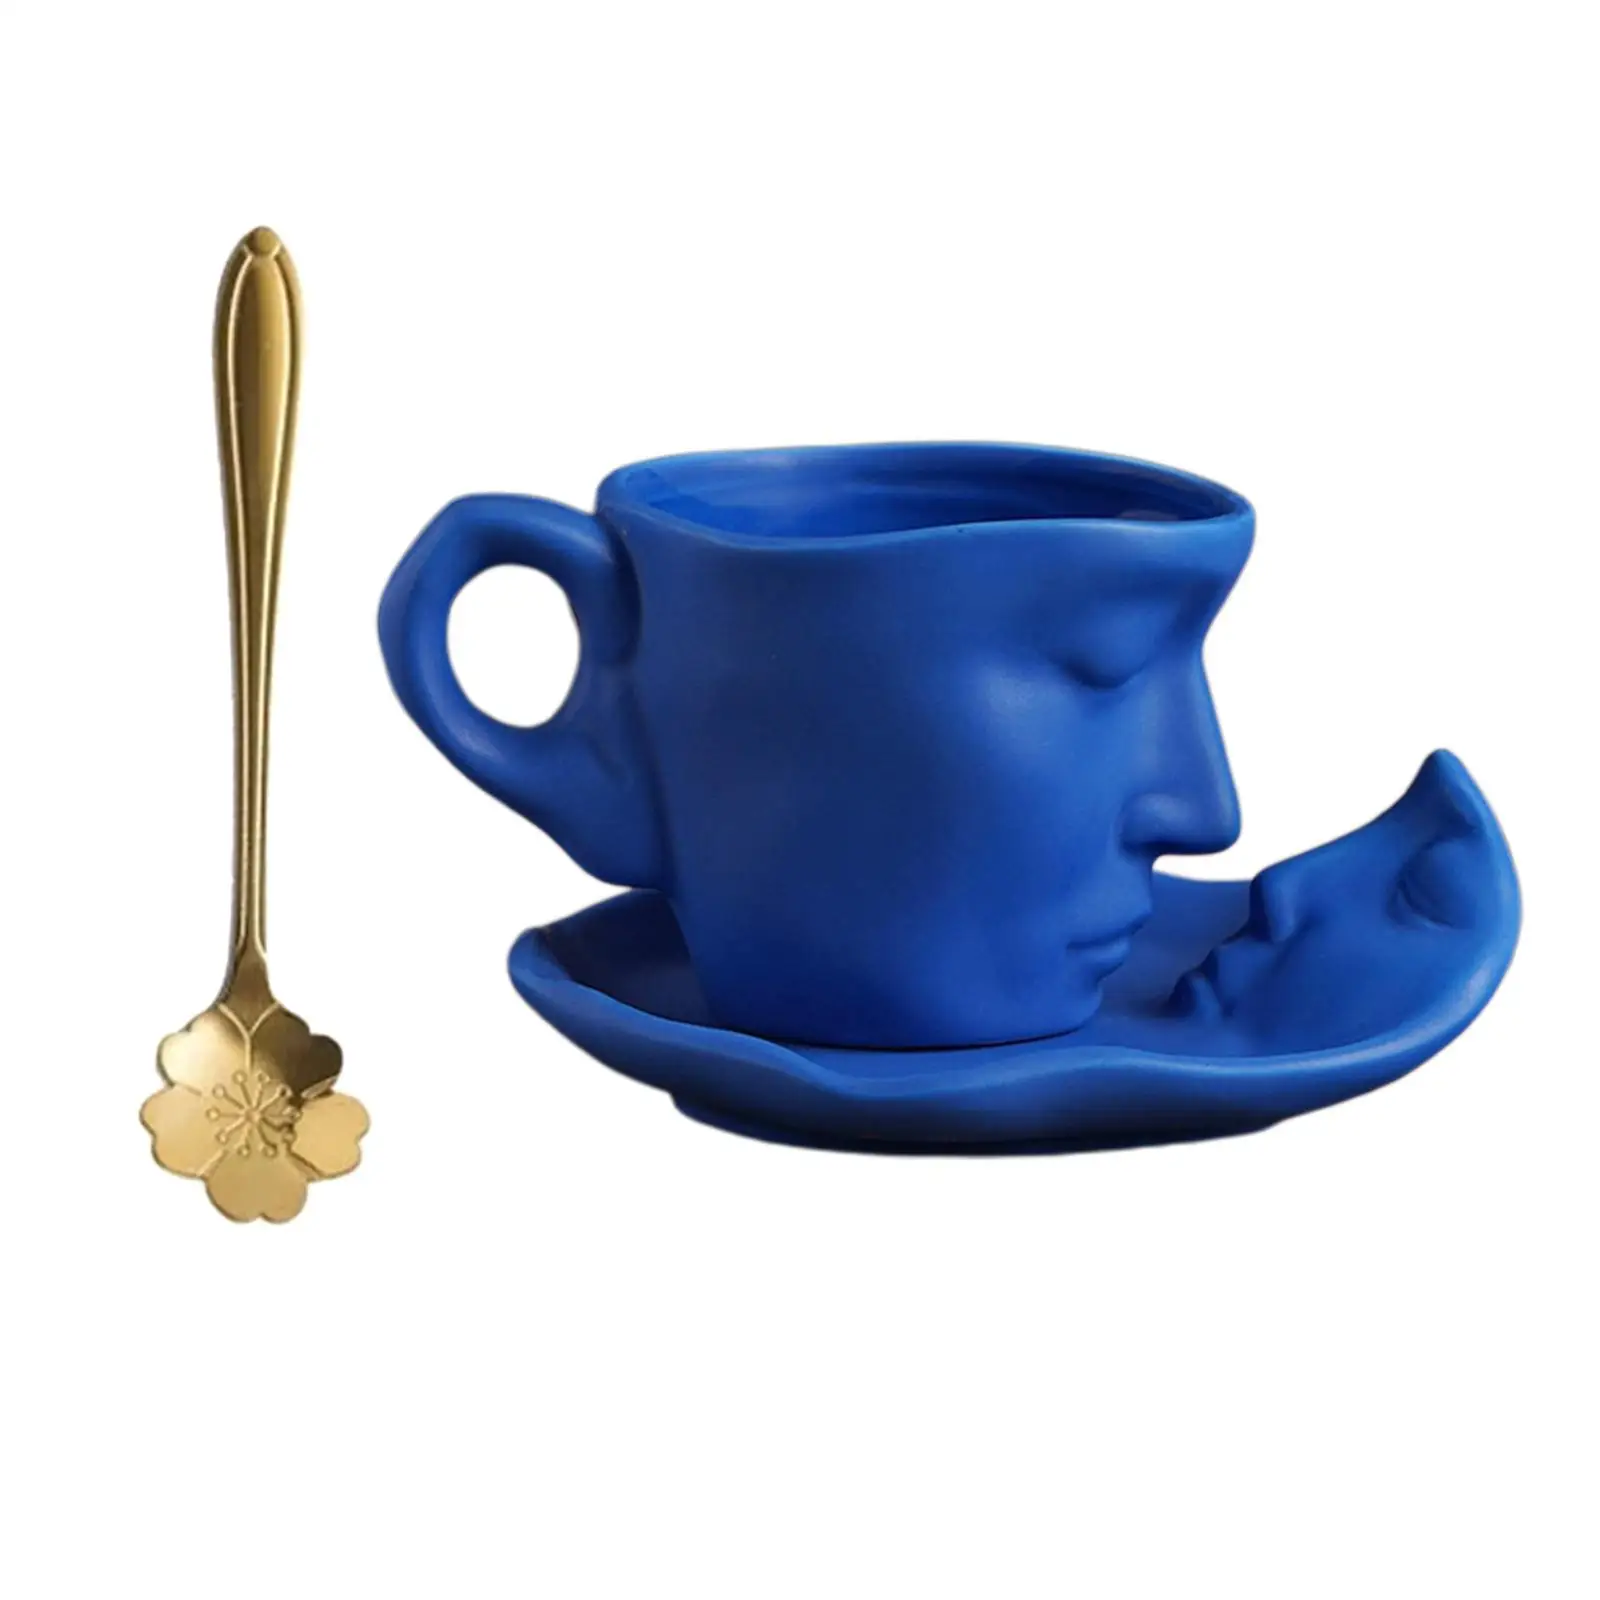 3D Human Face Kissing Mug Novelty Morning Cup Tea Mugs Table Arts 260ml for